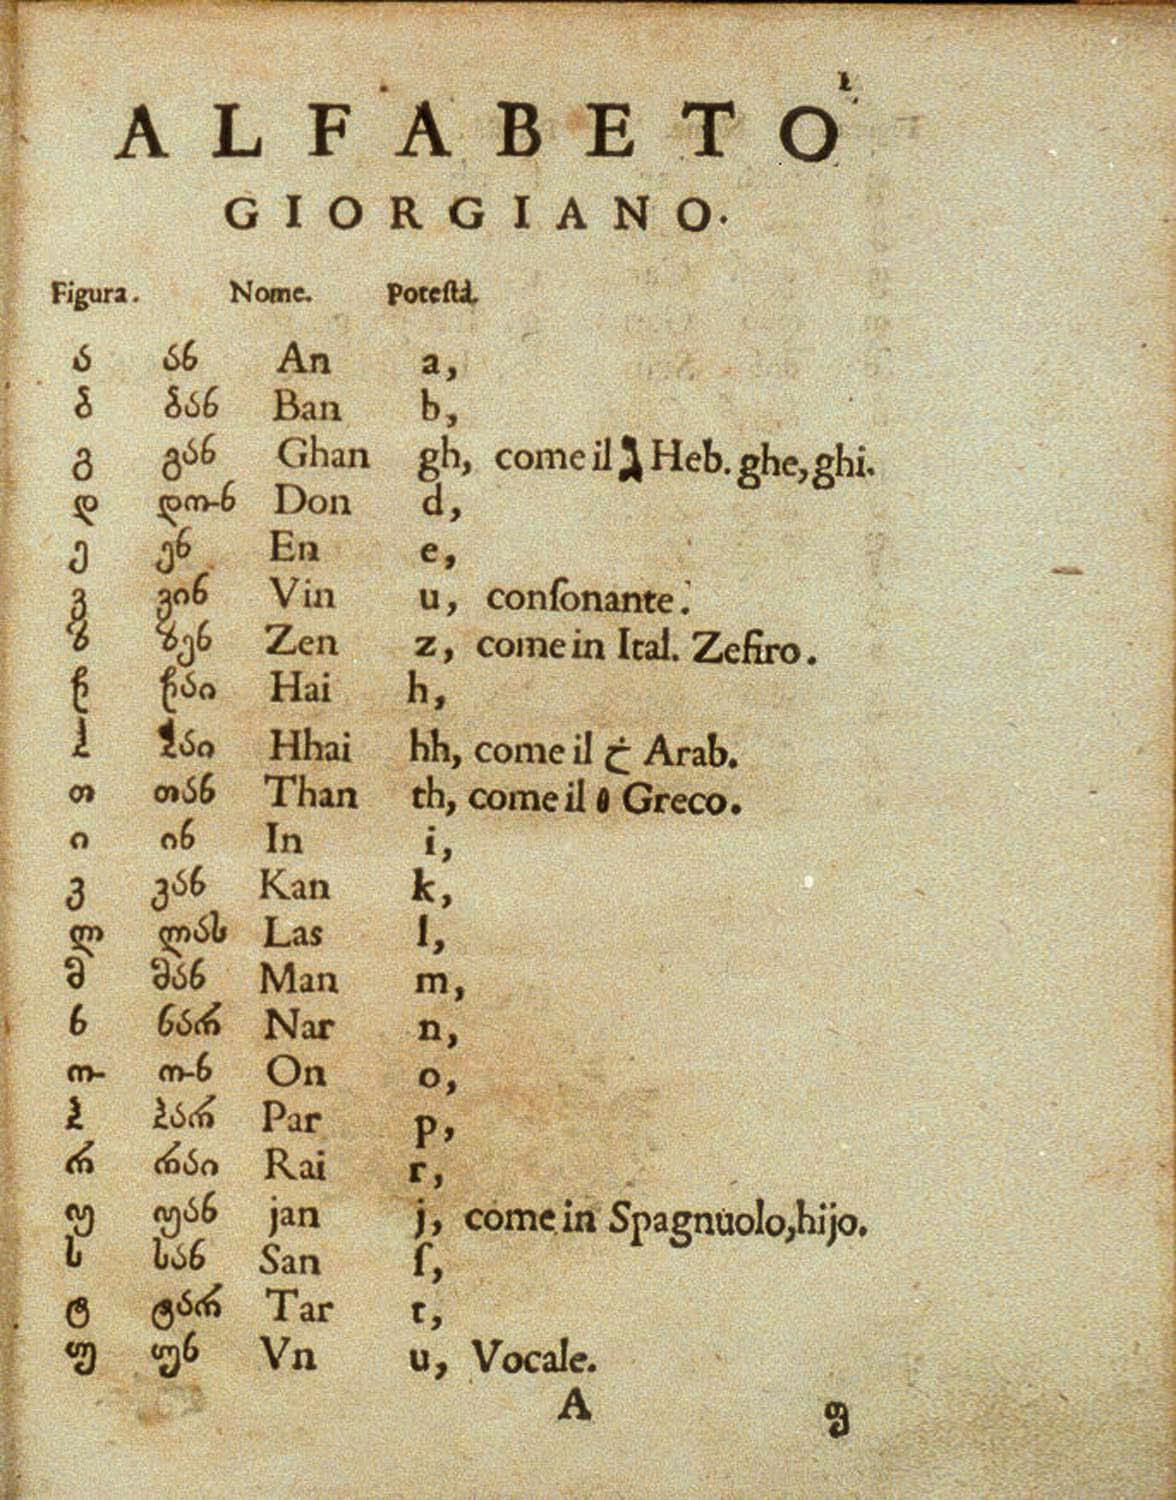 The first Georgian printed book